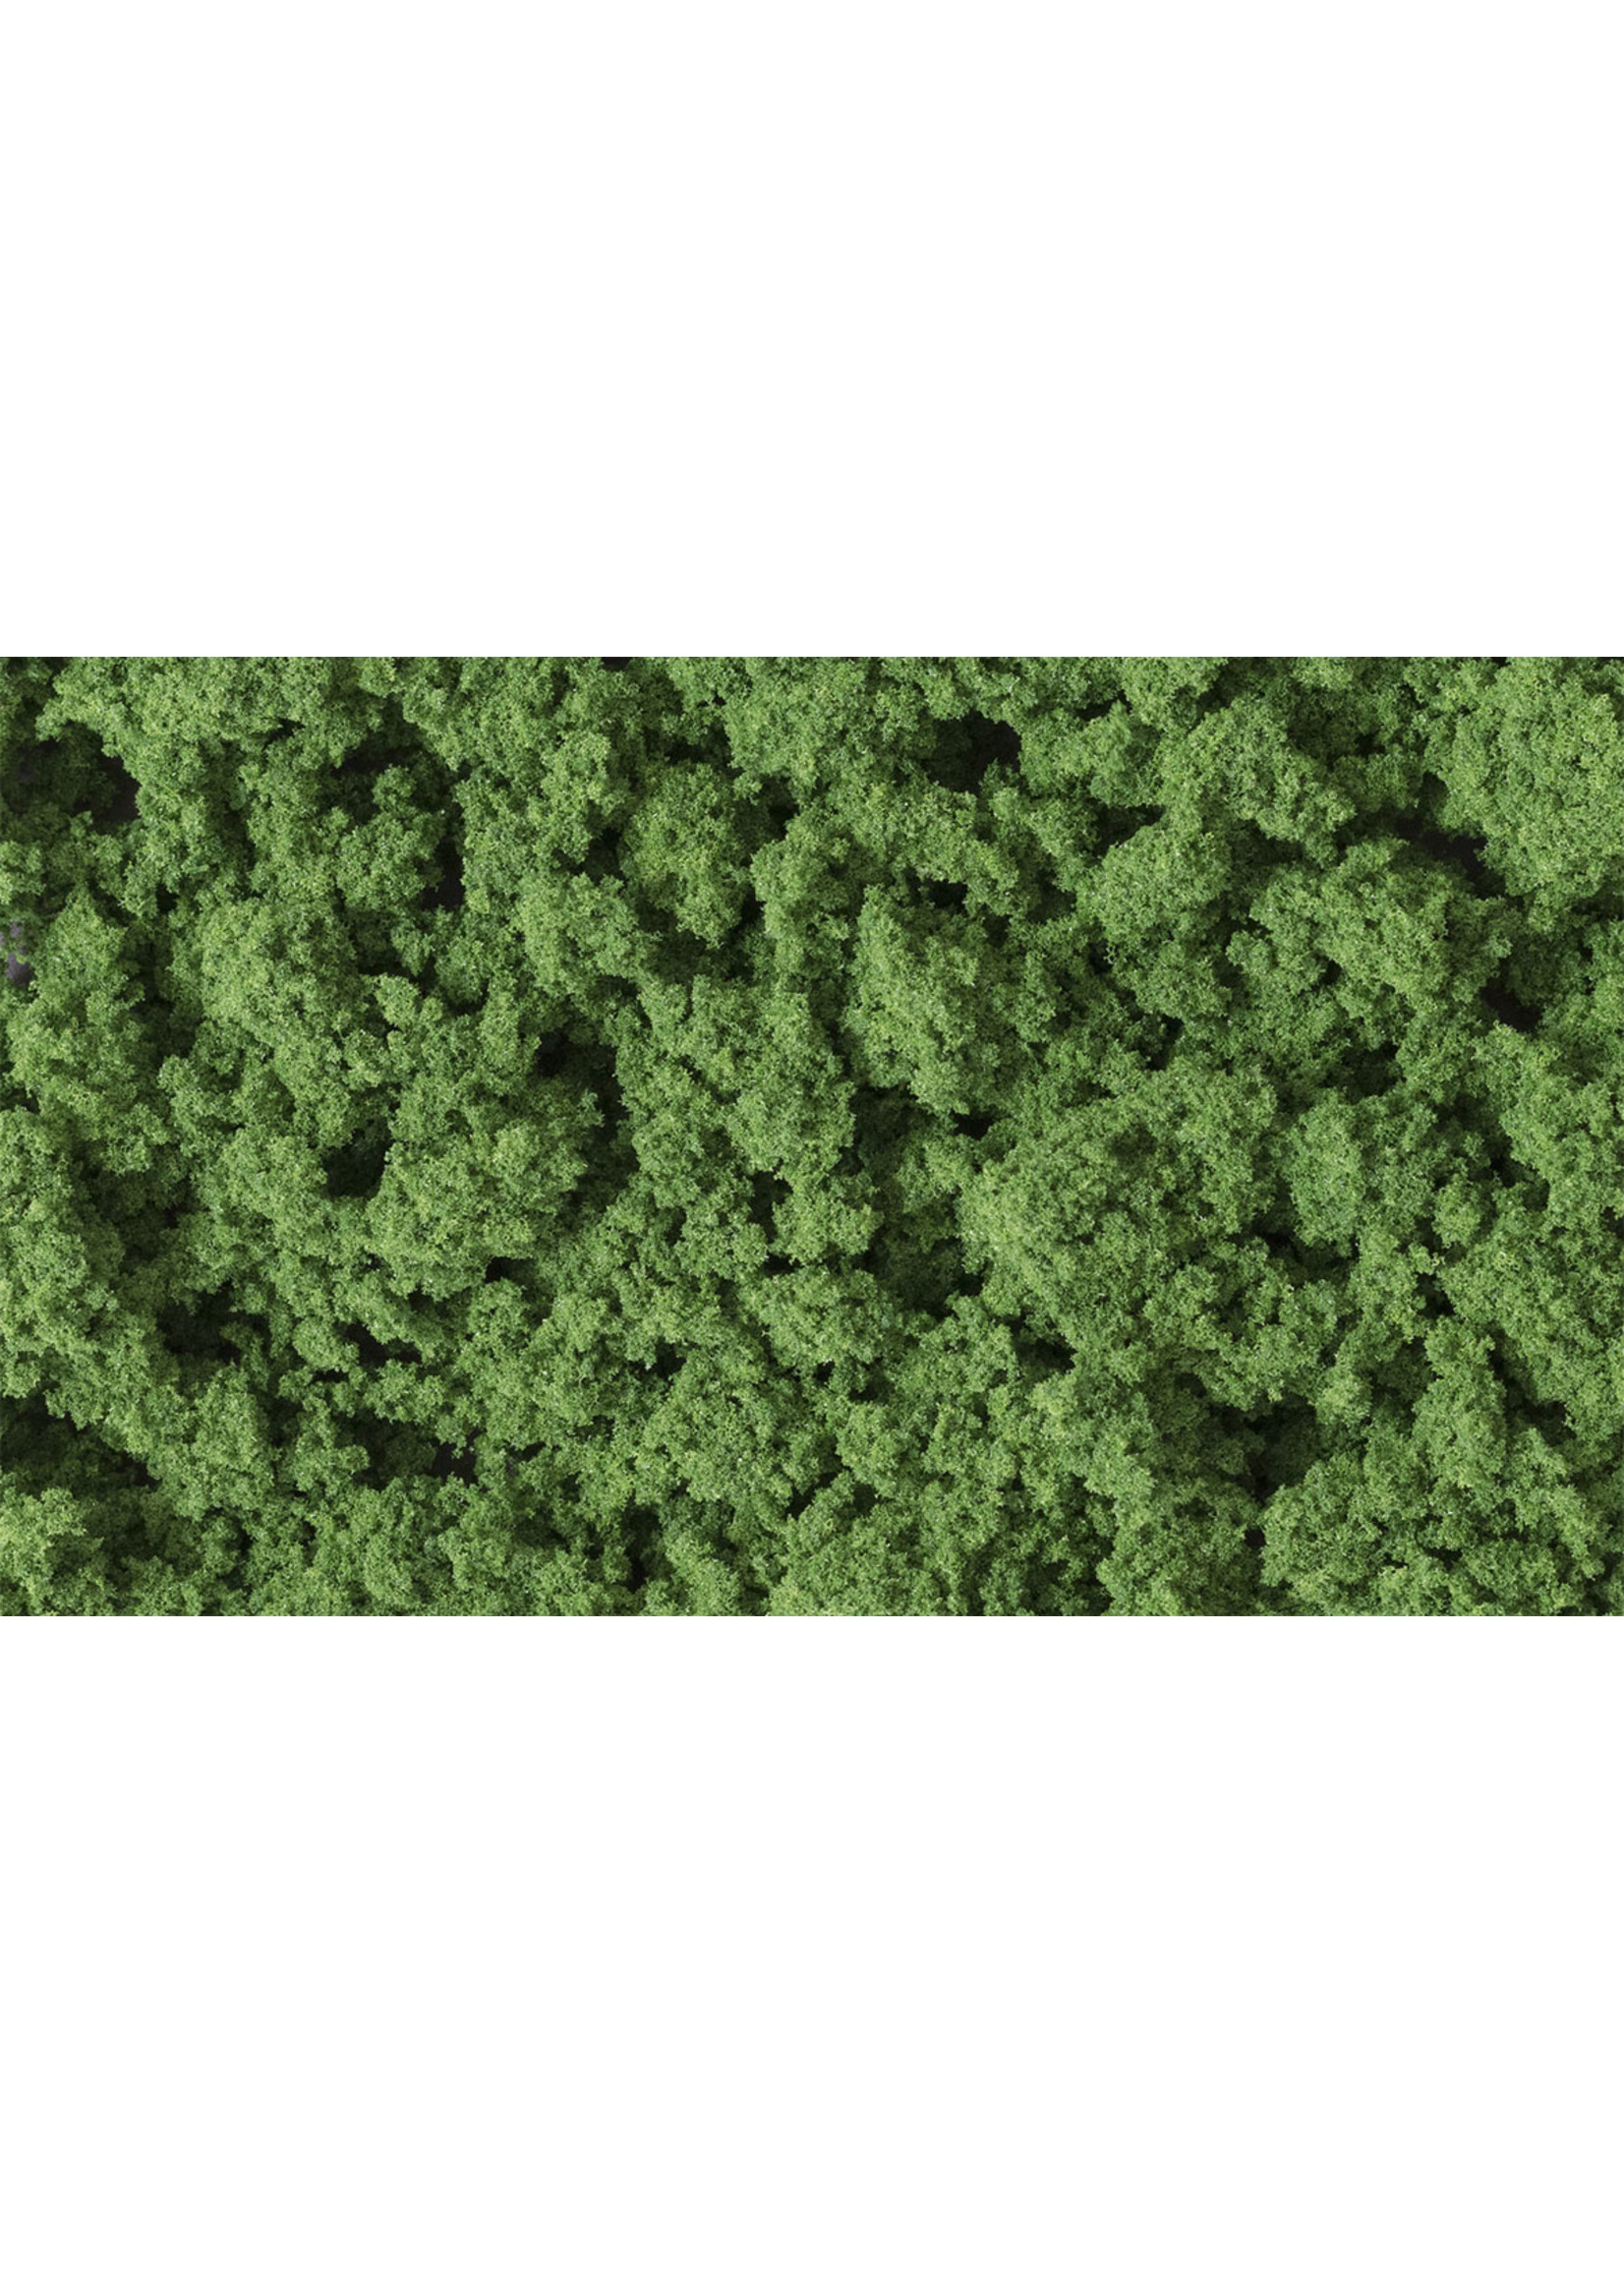 Woodland Scenics FC183 - Clump-Foliage Bag, 173 cu. in. - Medium Green